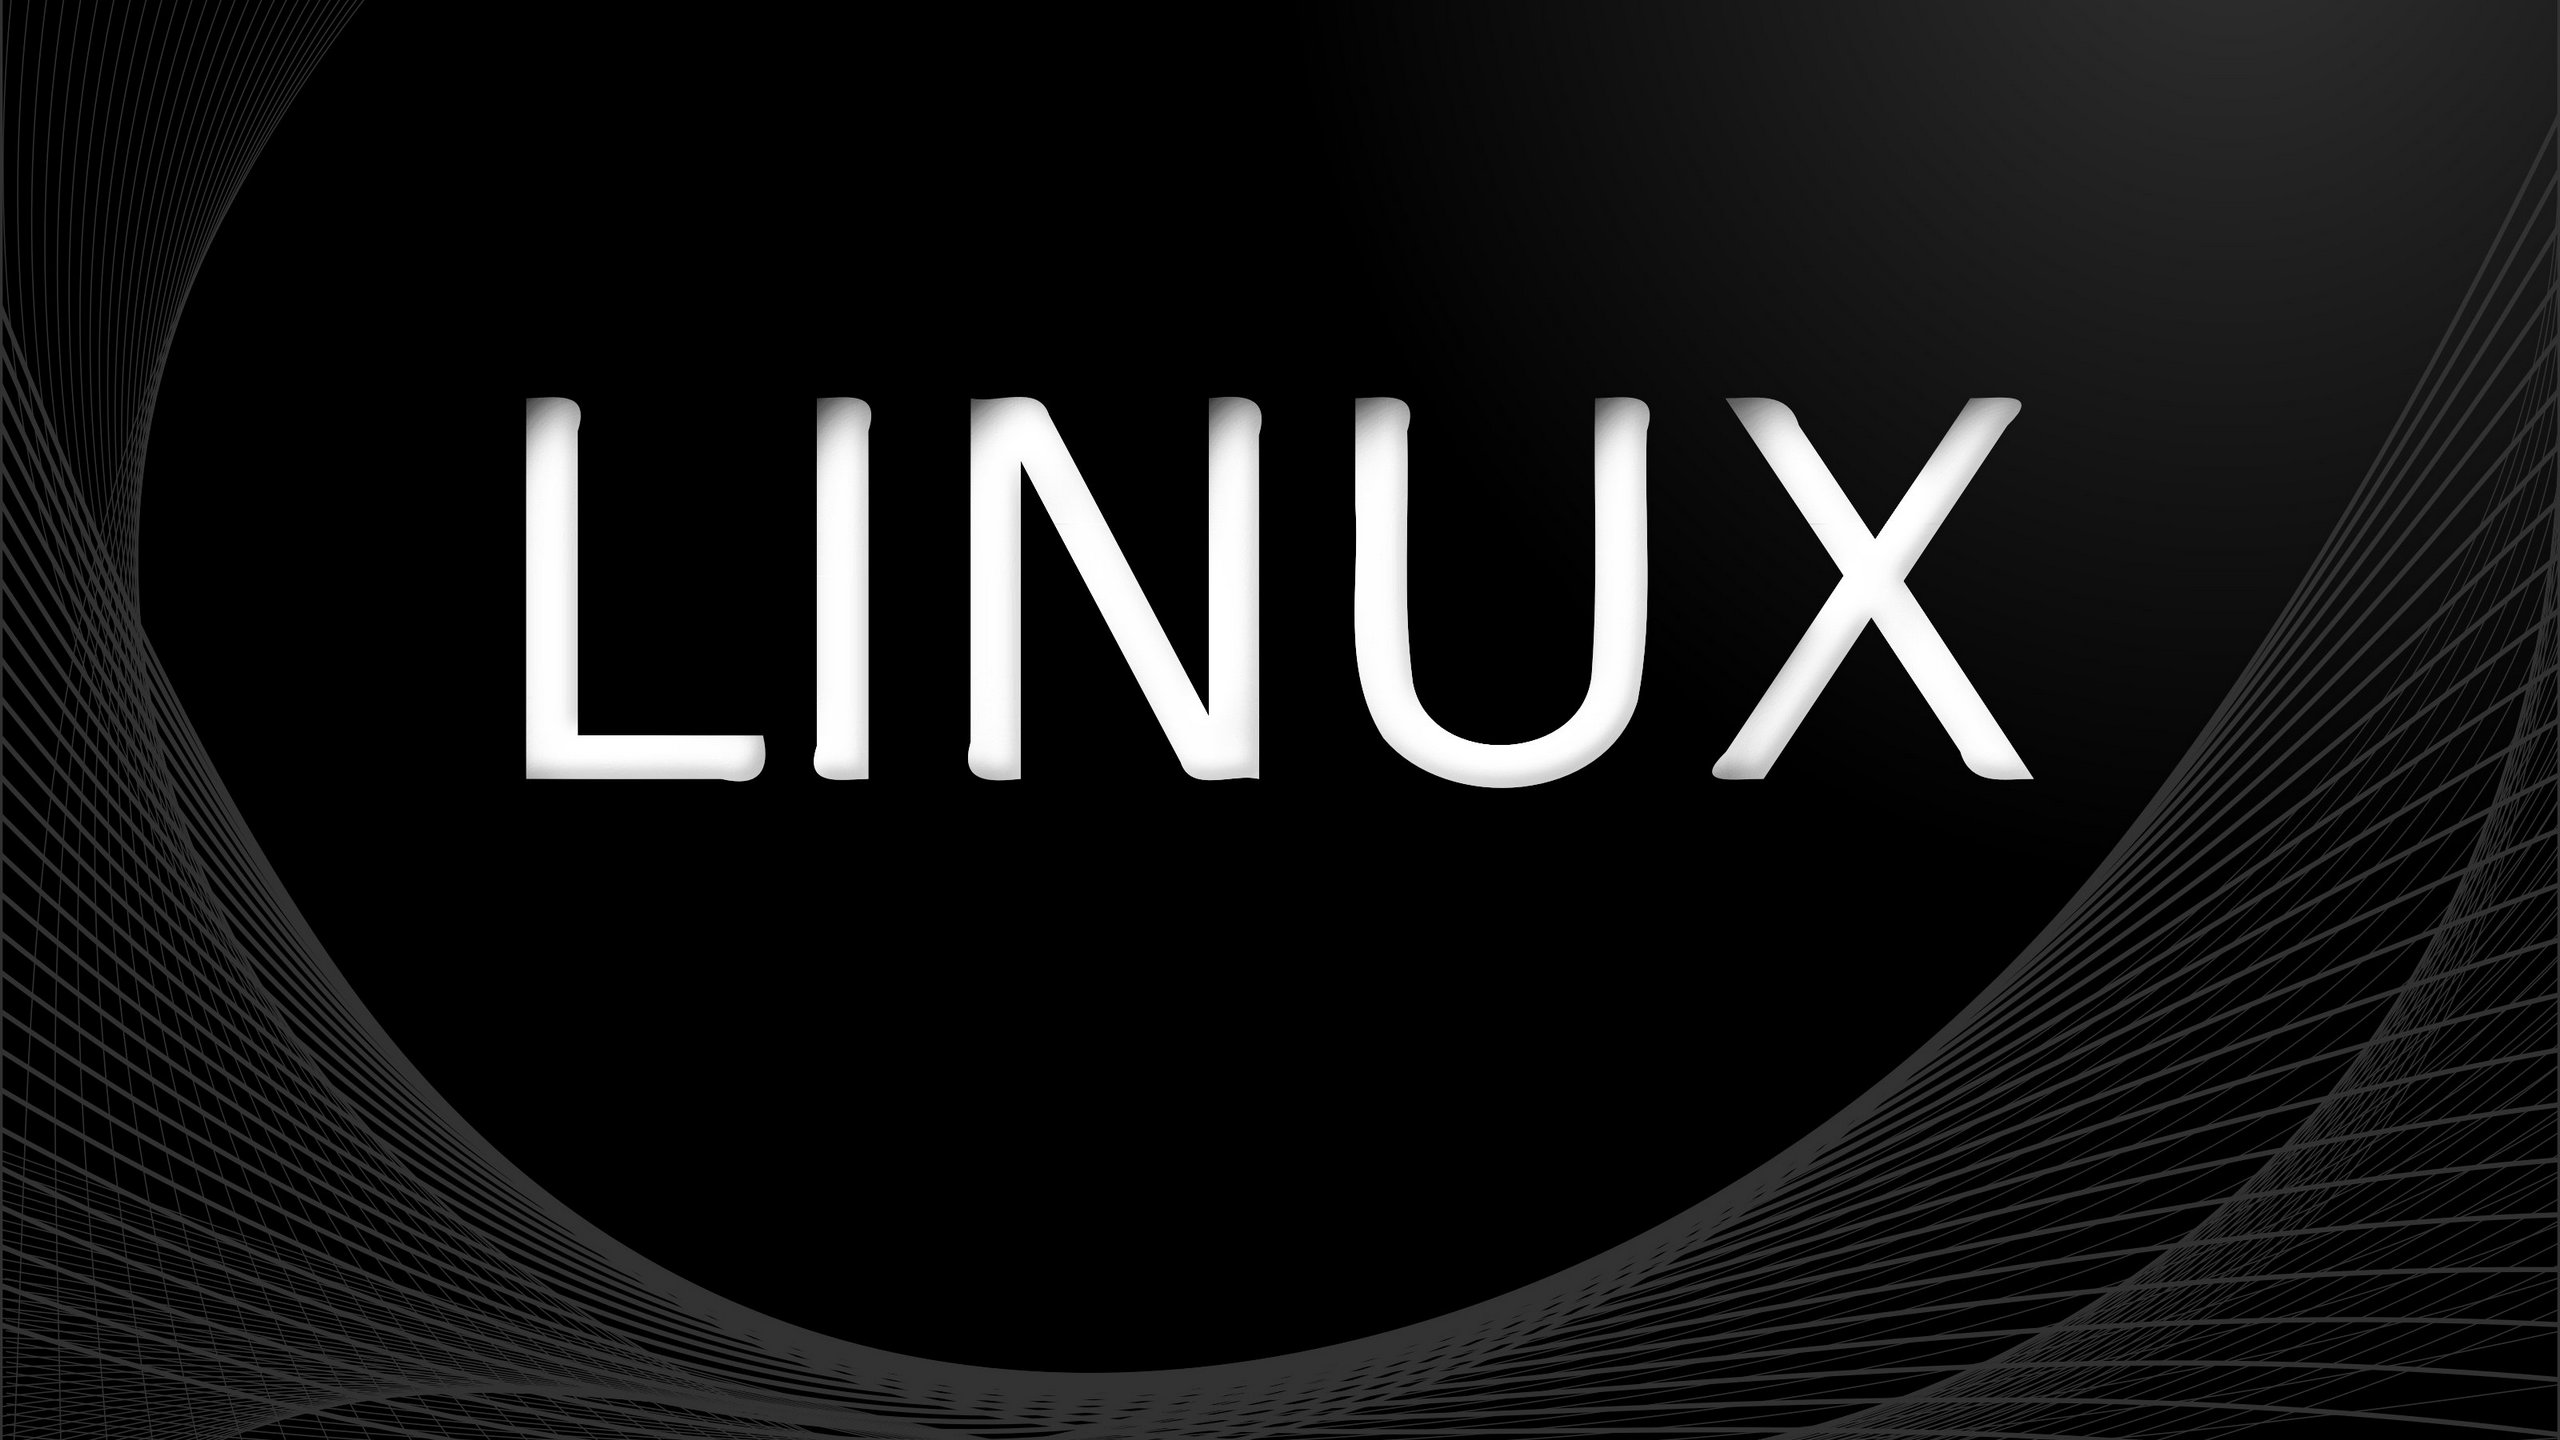 Linuxová tapeta 2560x1440.  Tapeta, tapetka, wallpaper, pozadí, wallpaper na plochu